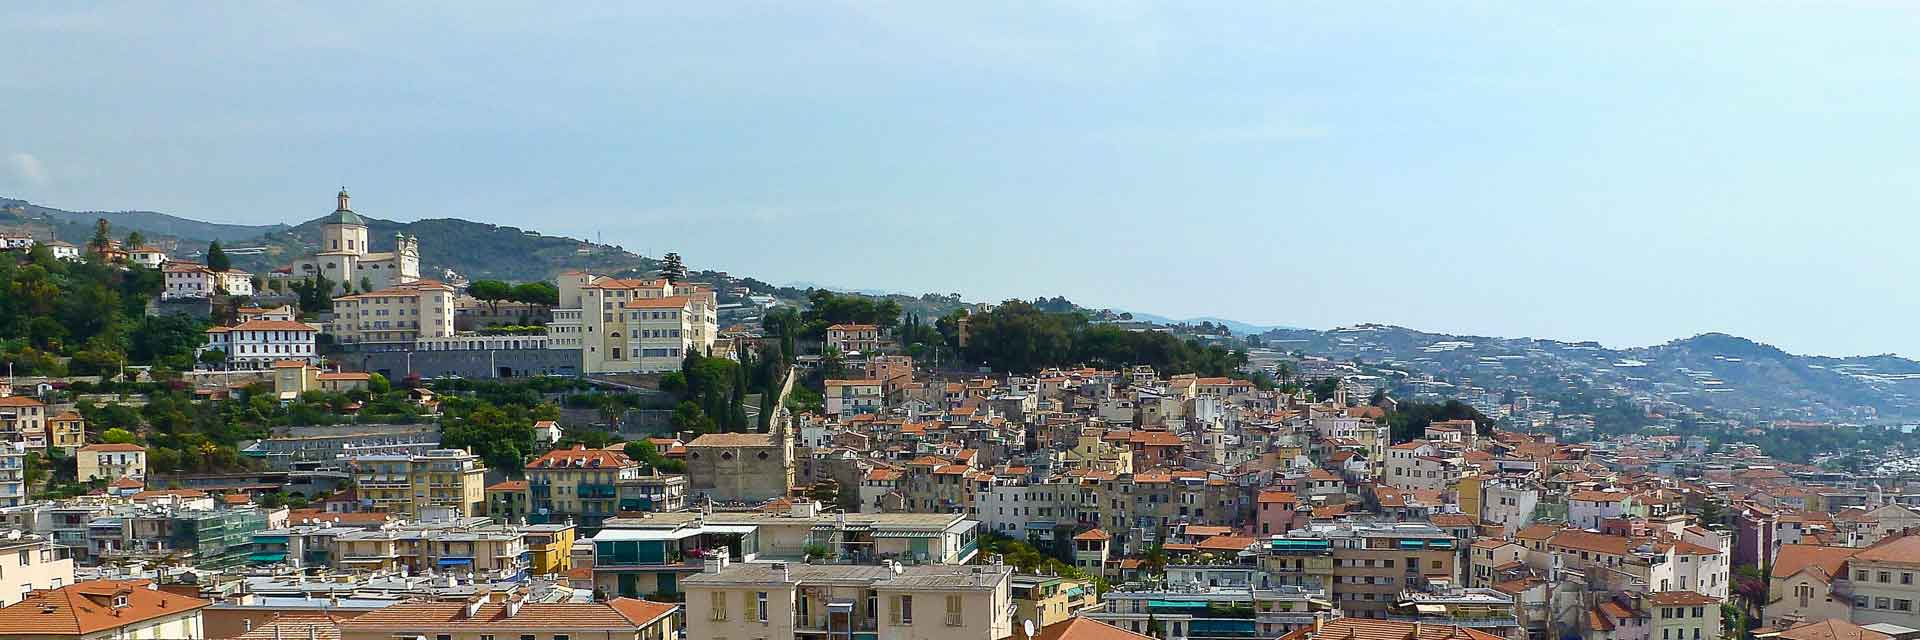 Sanremo - Pigna area (West side)